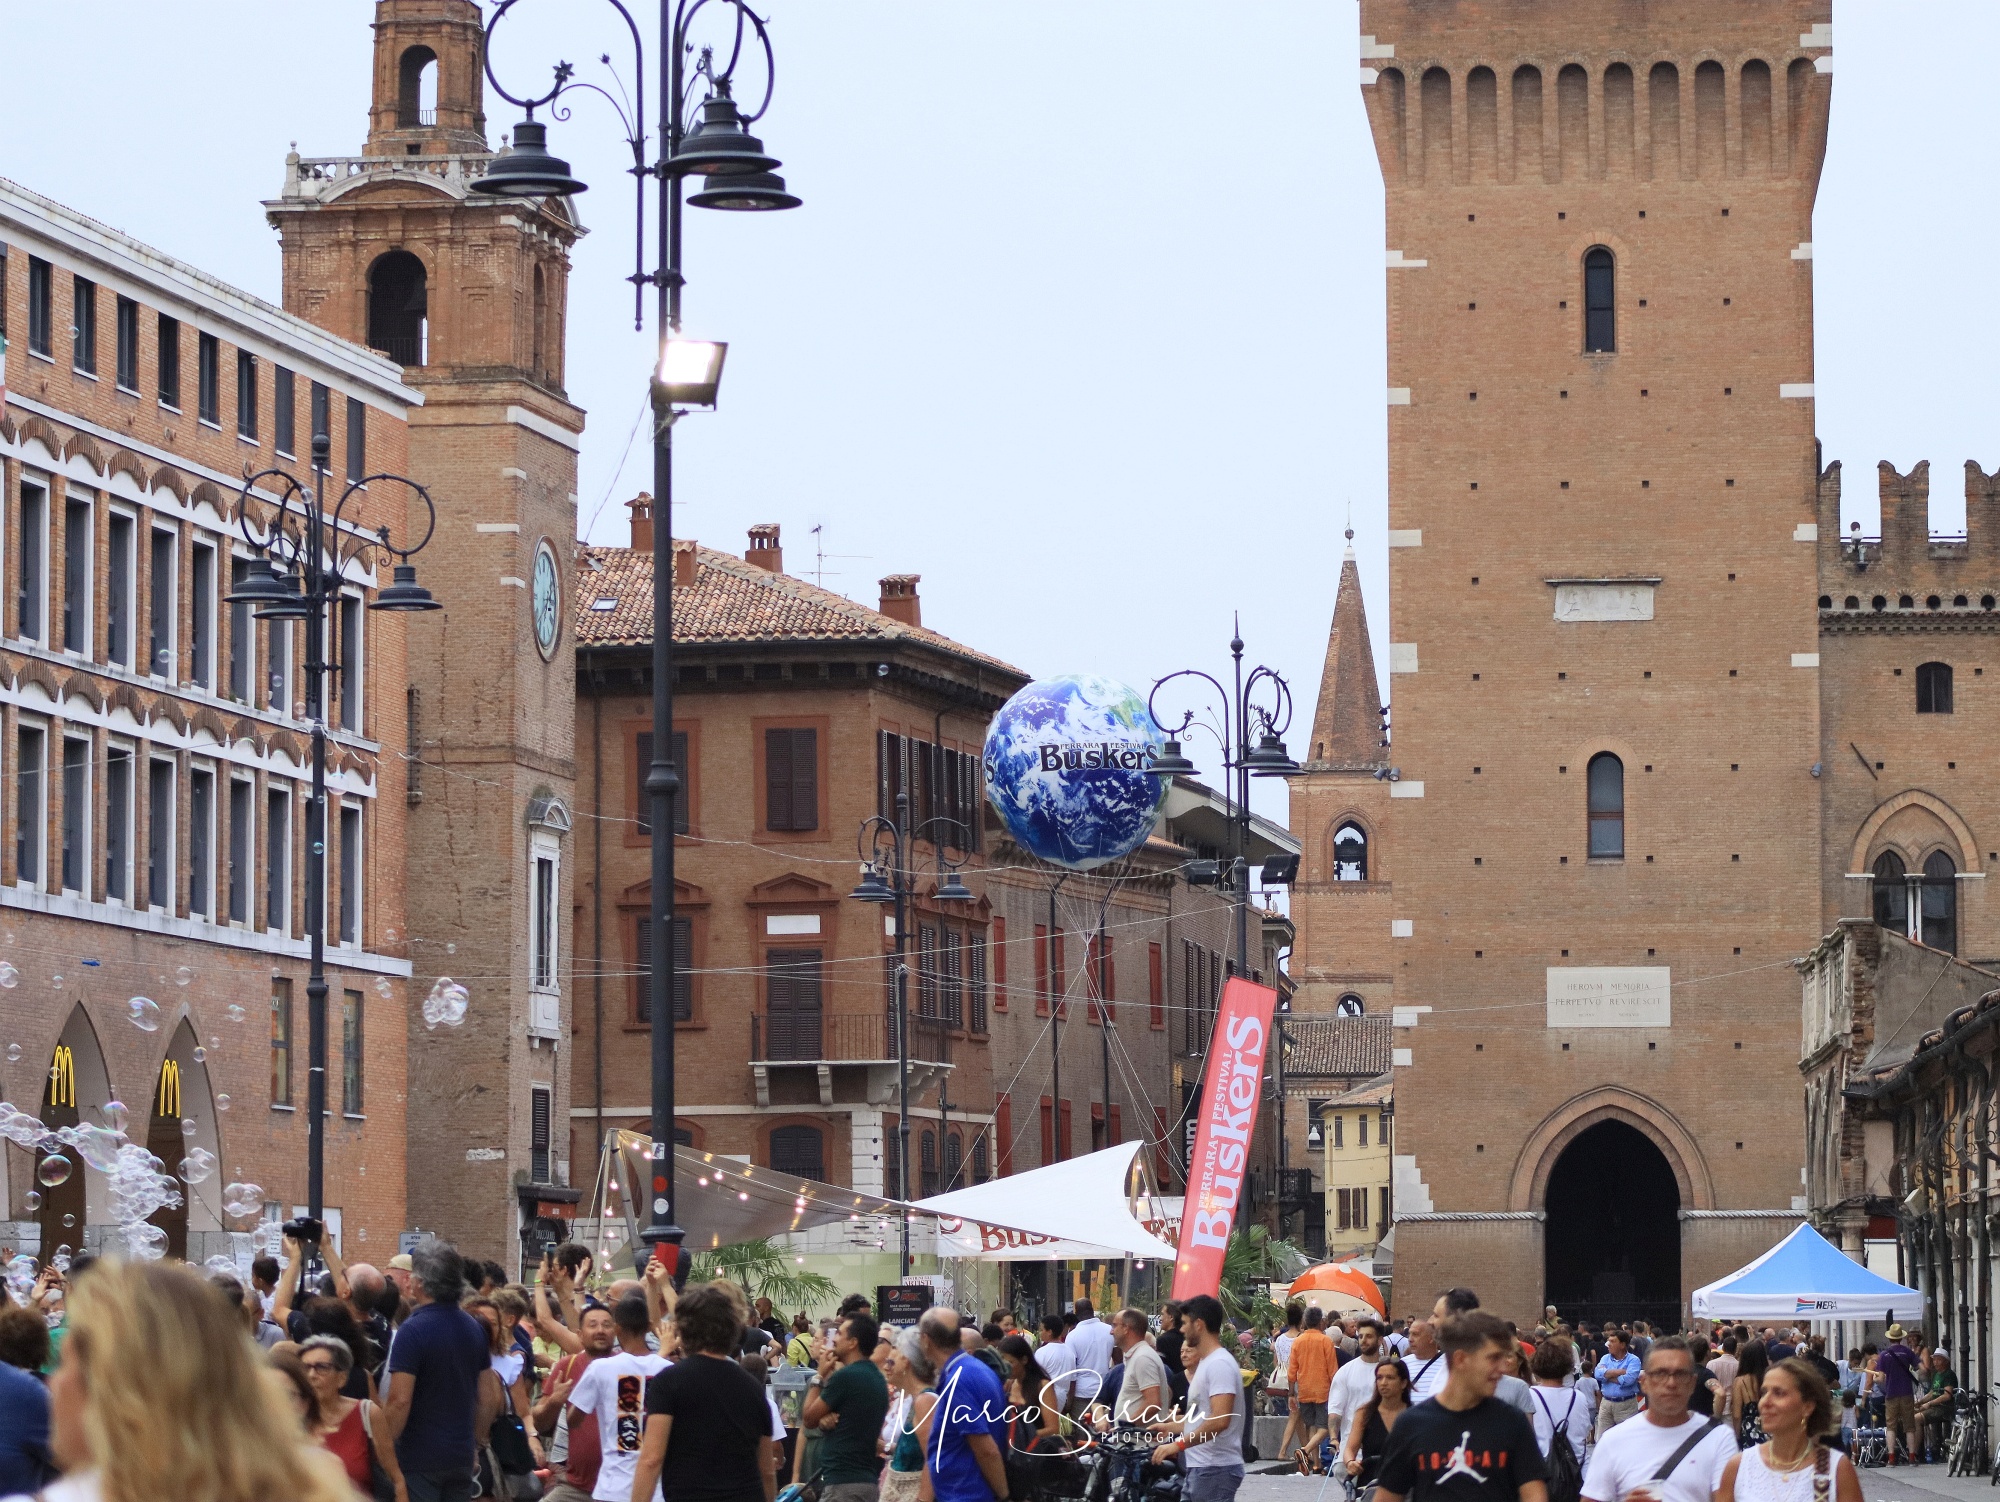 Ferrara Buskers Festival 2023